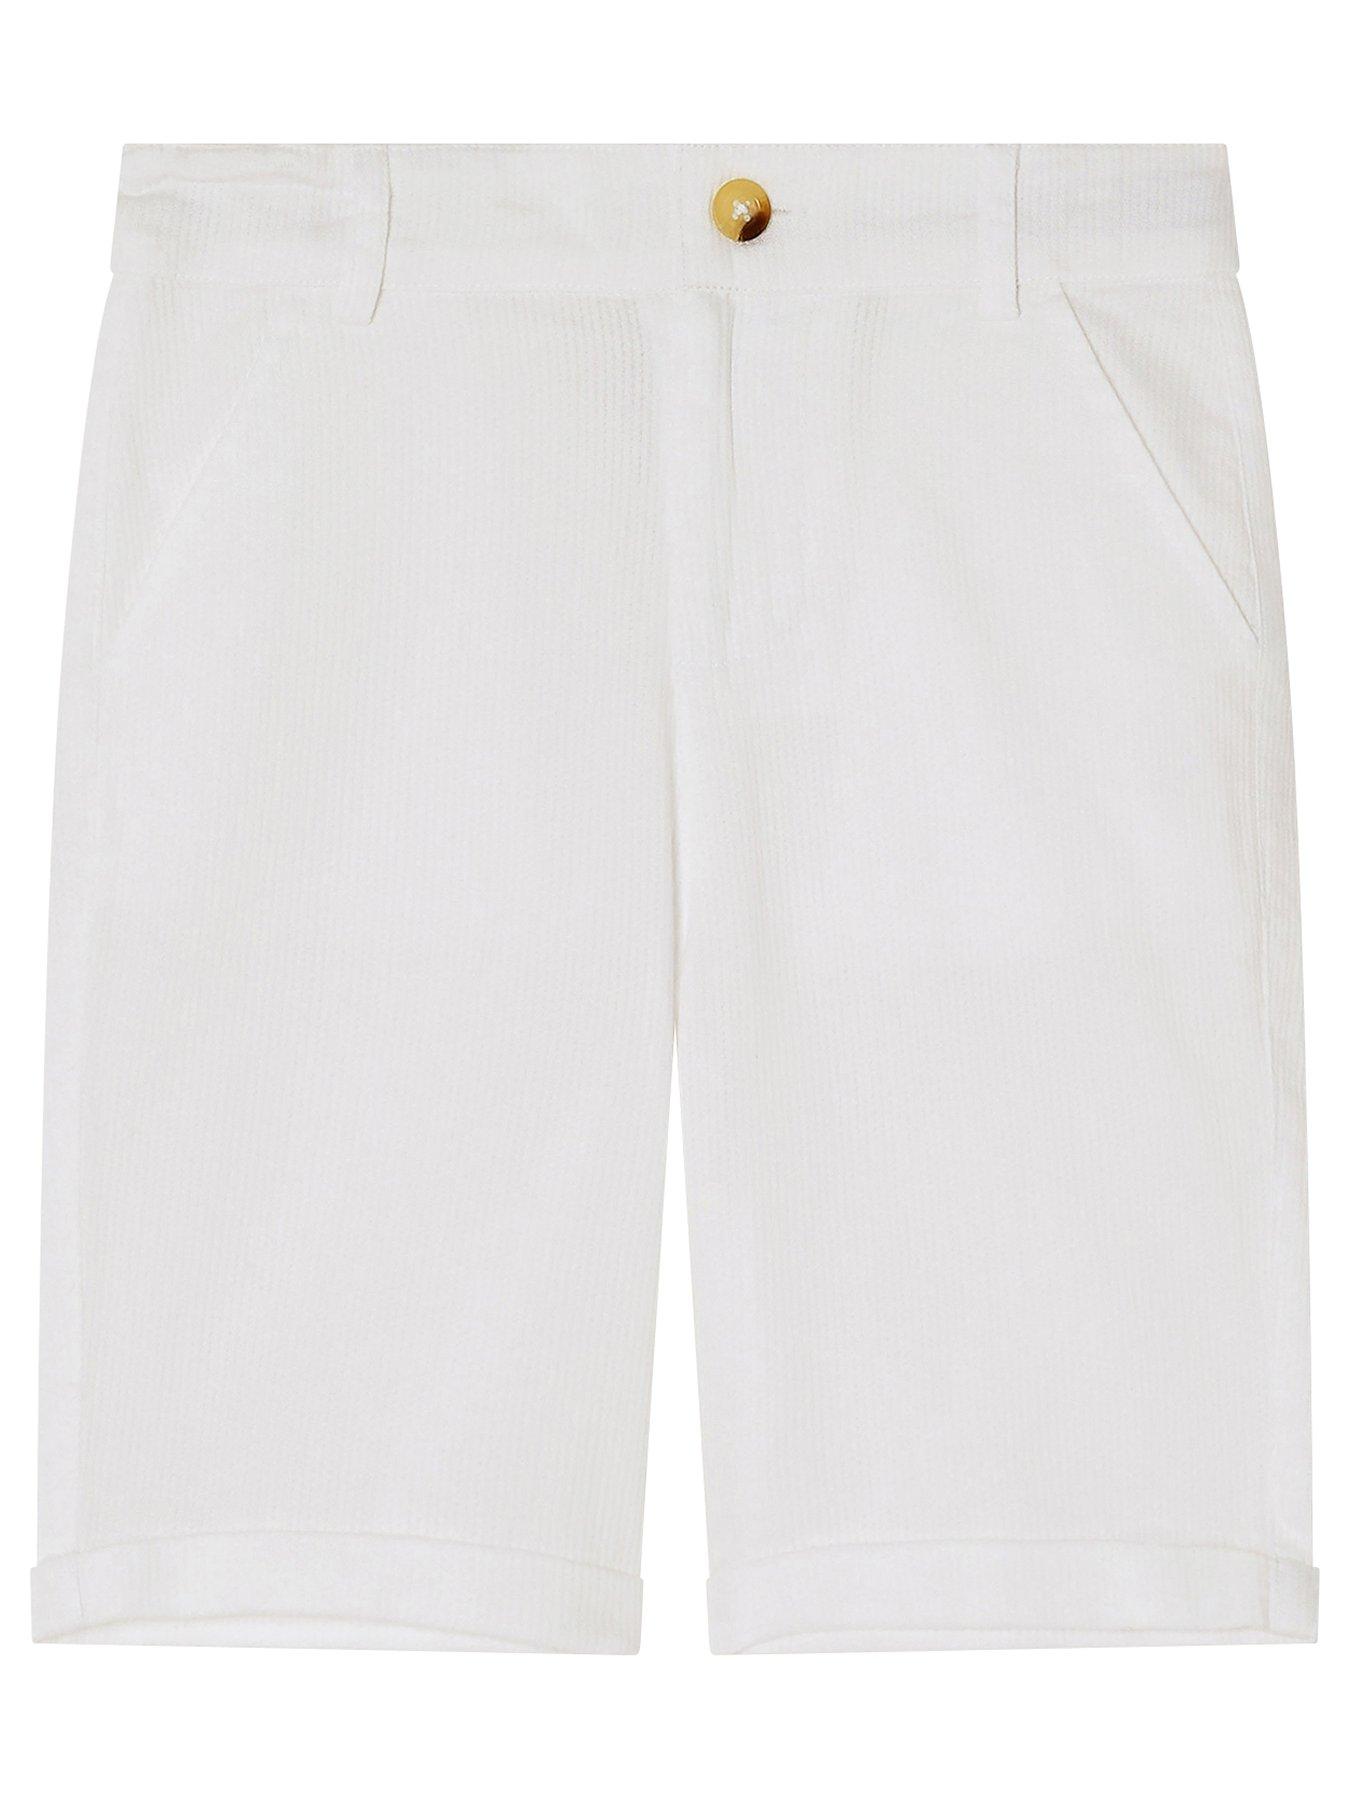 Boys Clothes Boys Smart Shorts - White